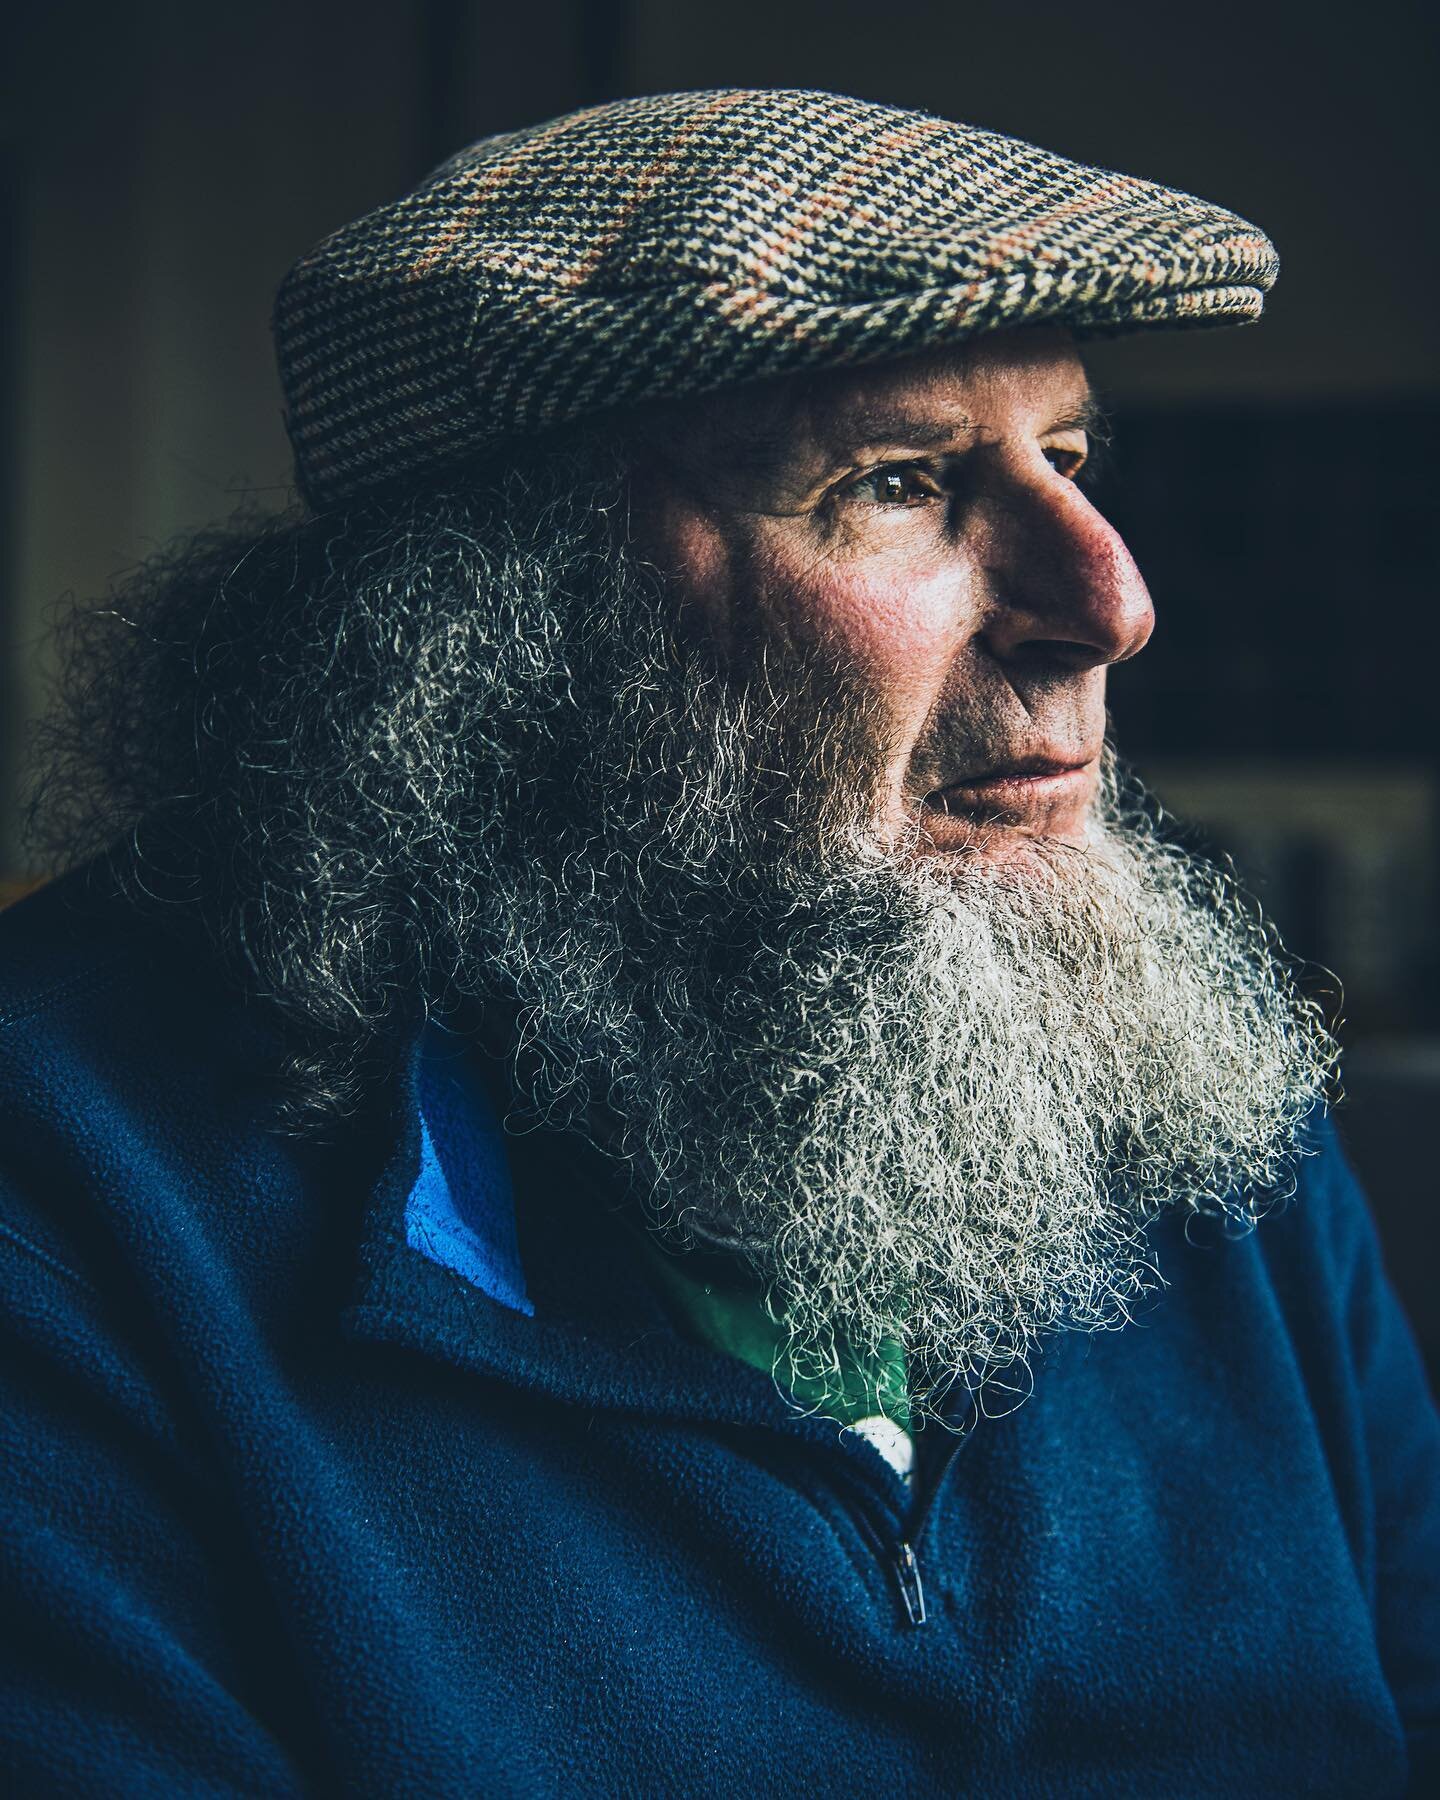 Pete Headshot #face #portrait #saynotopilates #badge #headshot #beautiful #human #beard #hat #flatcap #stokenewington #londoner #london #gentleman #photography #photographer #photo #capture #lincolnshire